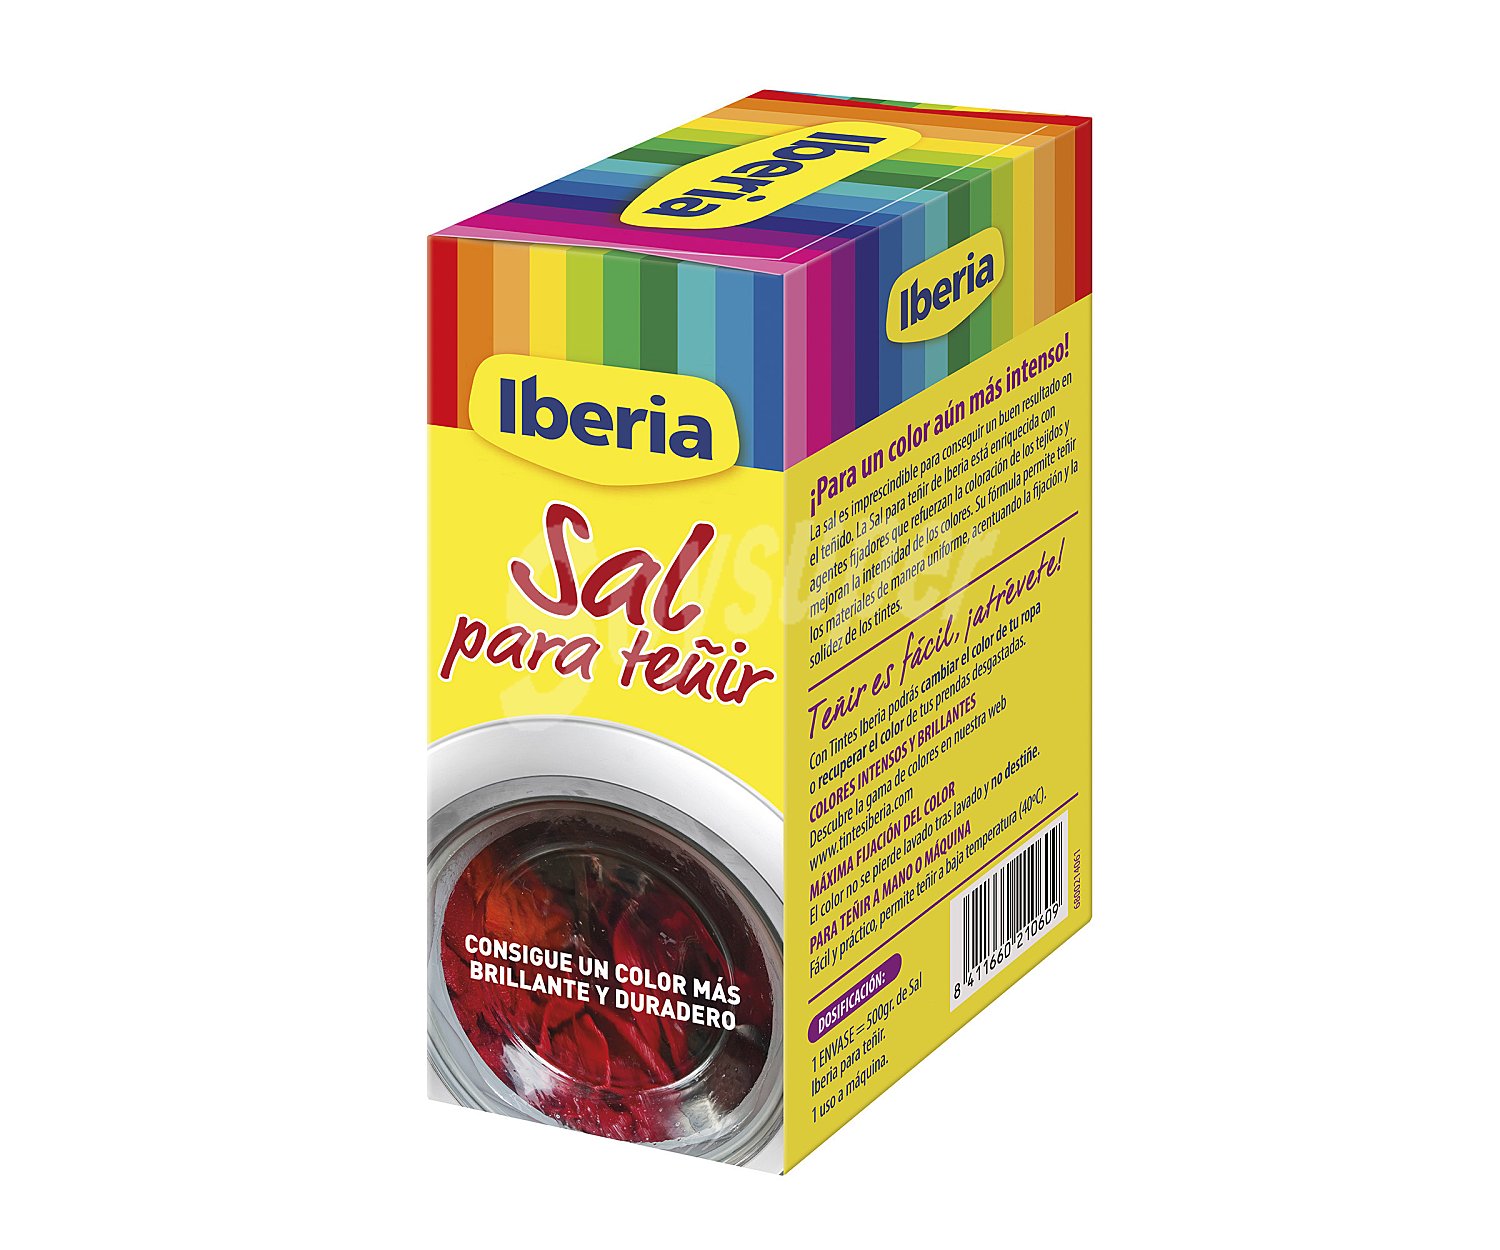 Fiesta del color con Tintes Iberia - HANDBOX  Material de costura, Tinte,  Tintes naturales